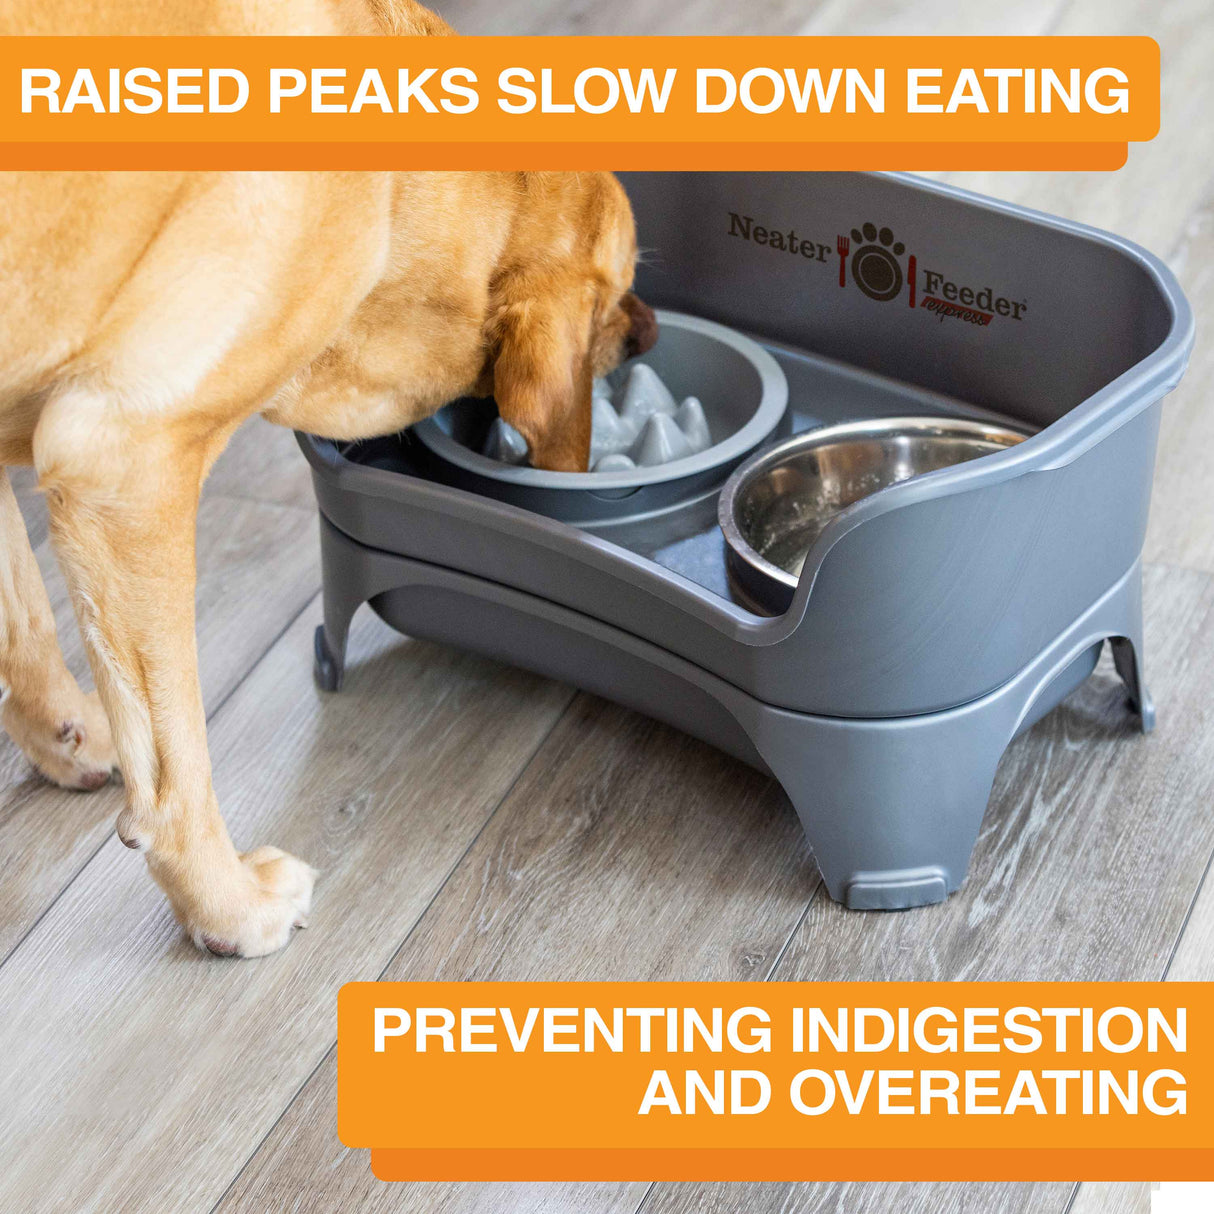 Niner's raised peaks slow down eating to prevent indigestion